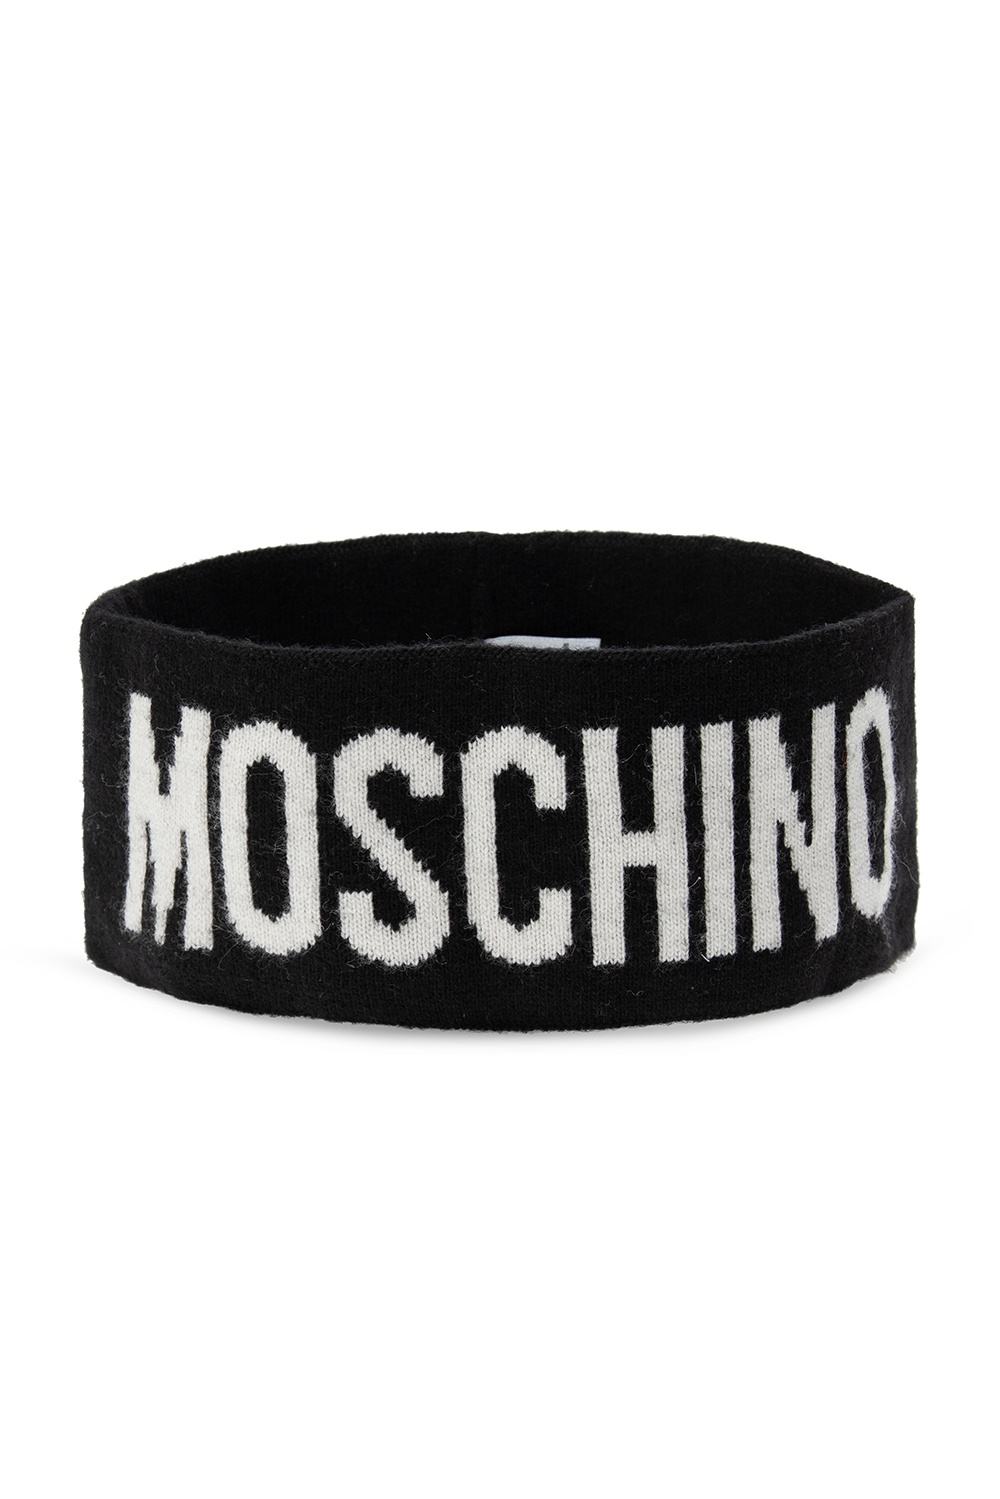 Logo headband Moschino - Vitkac Singapore